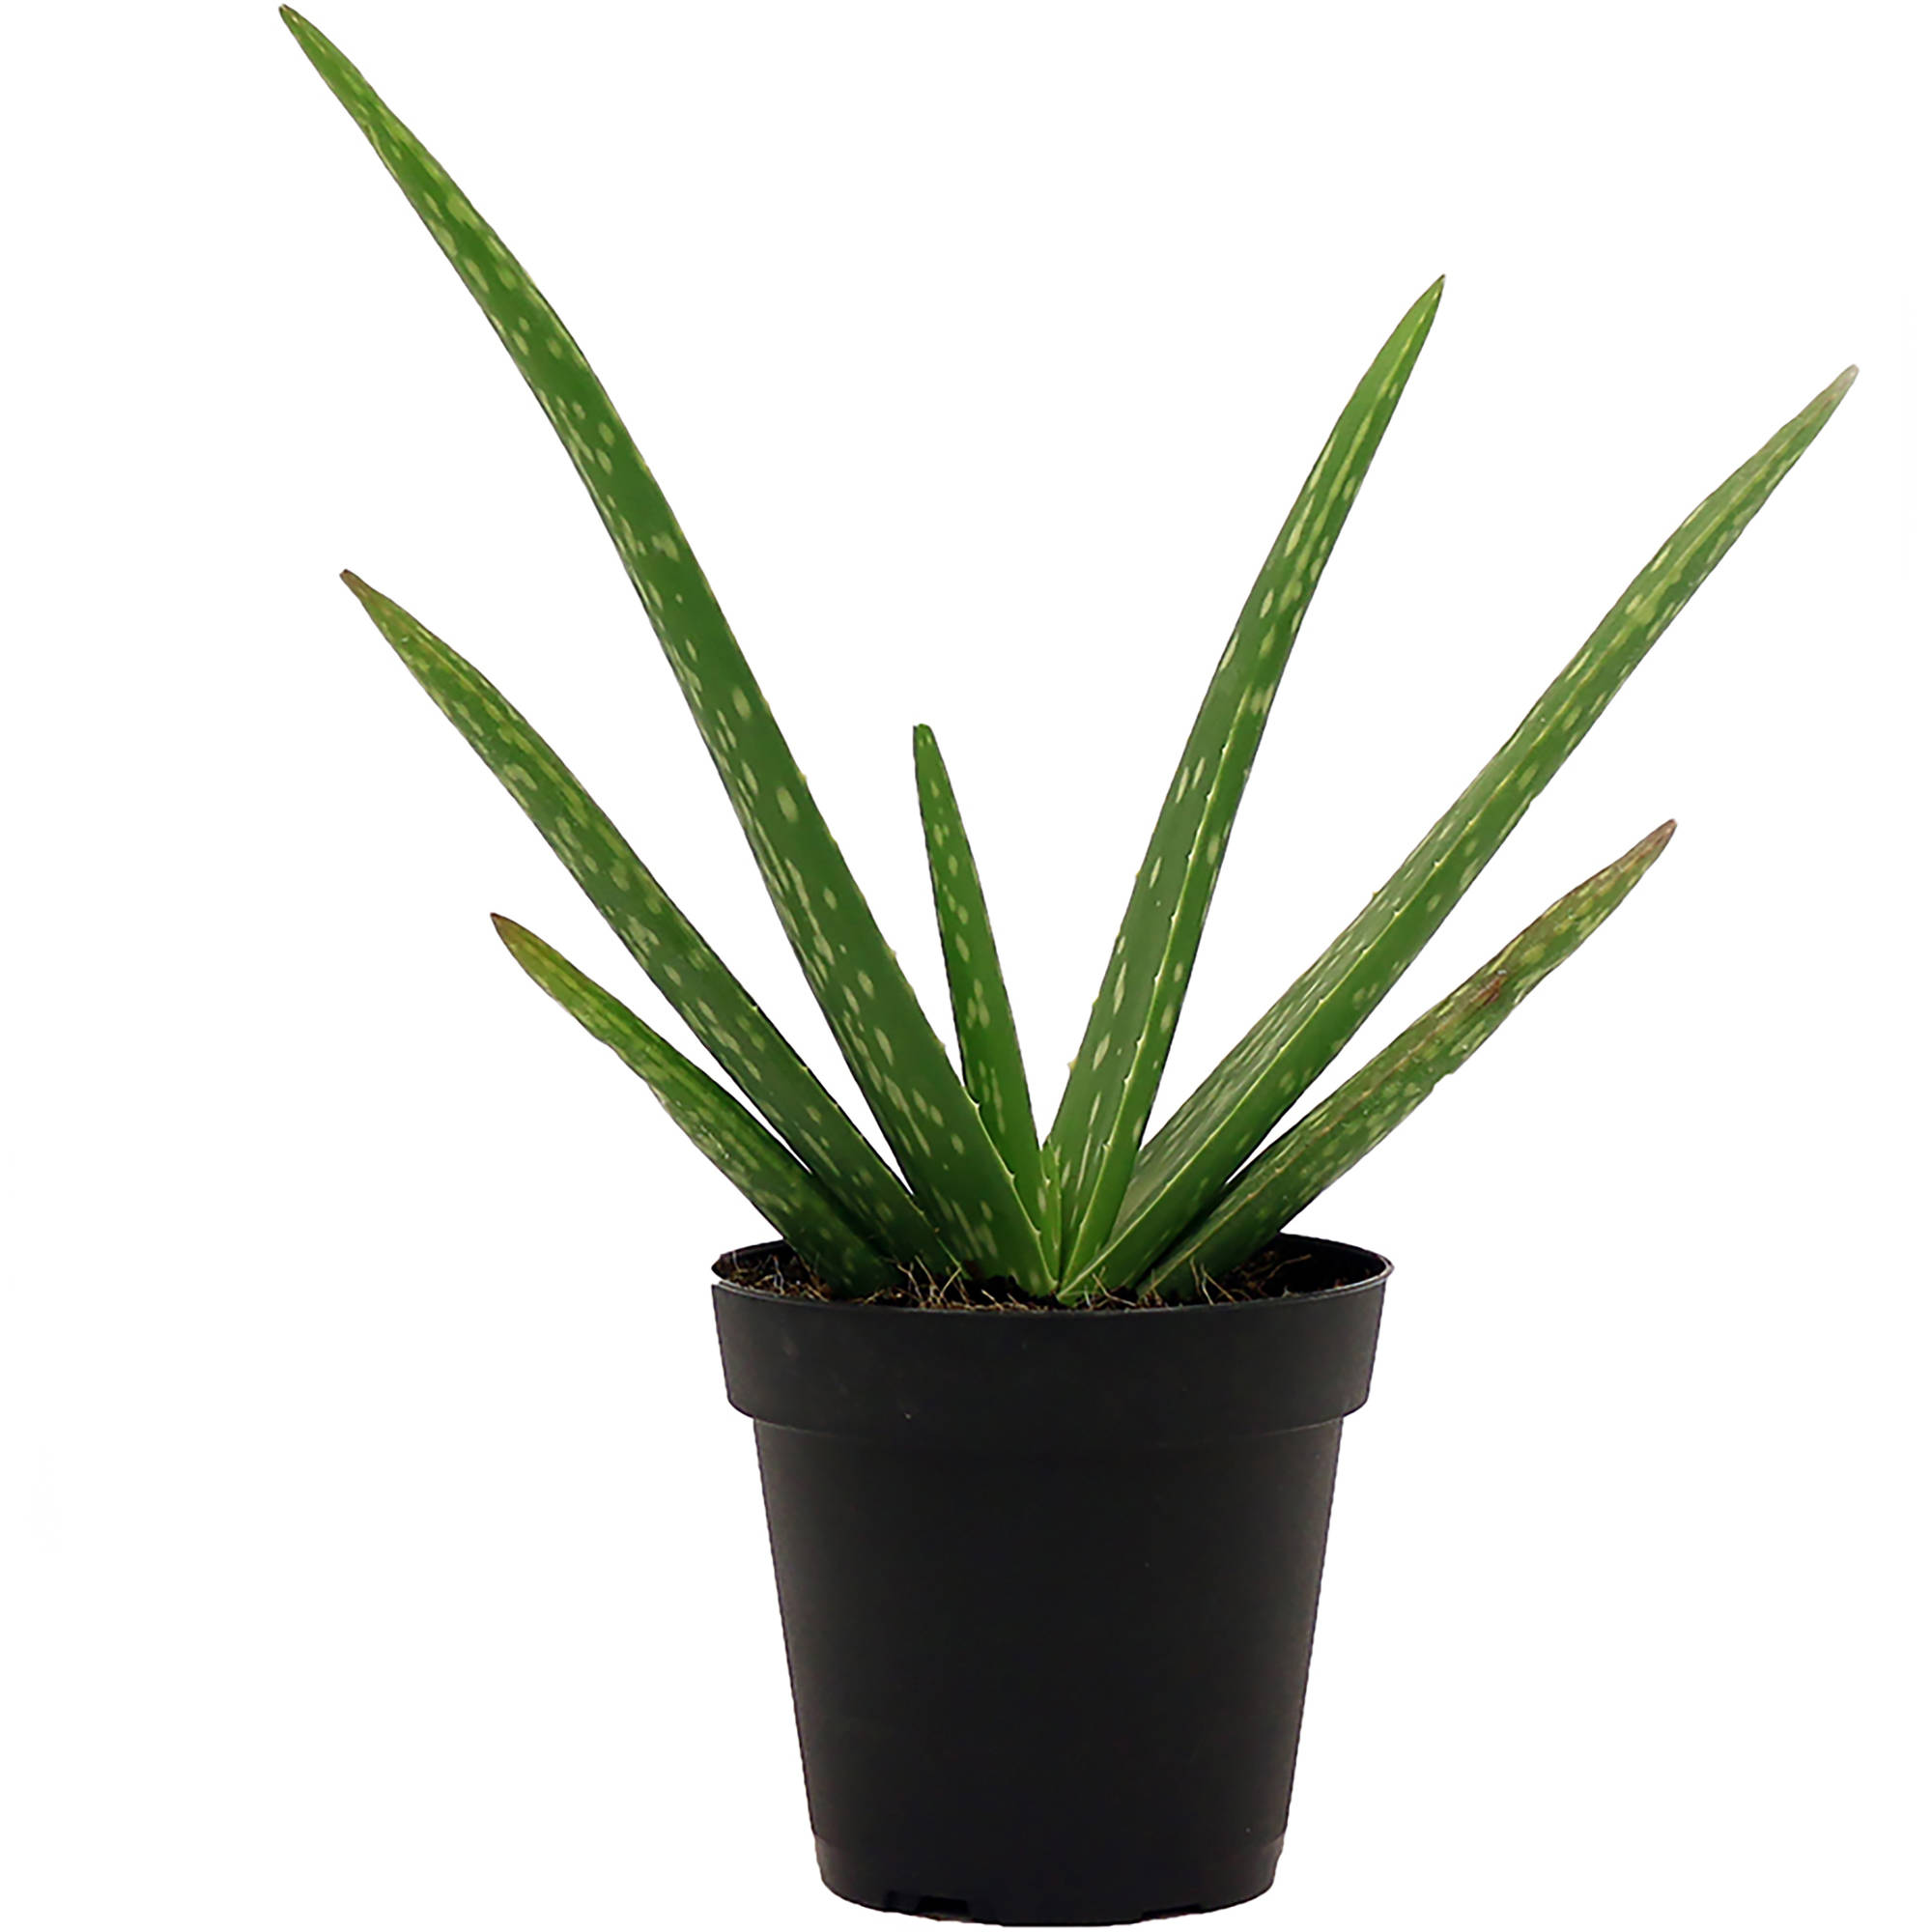 Buy Aloe Vera Plants Online | Free Shipping Over $99.99